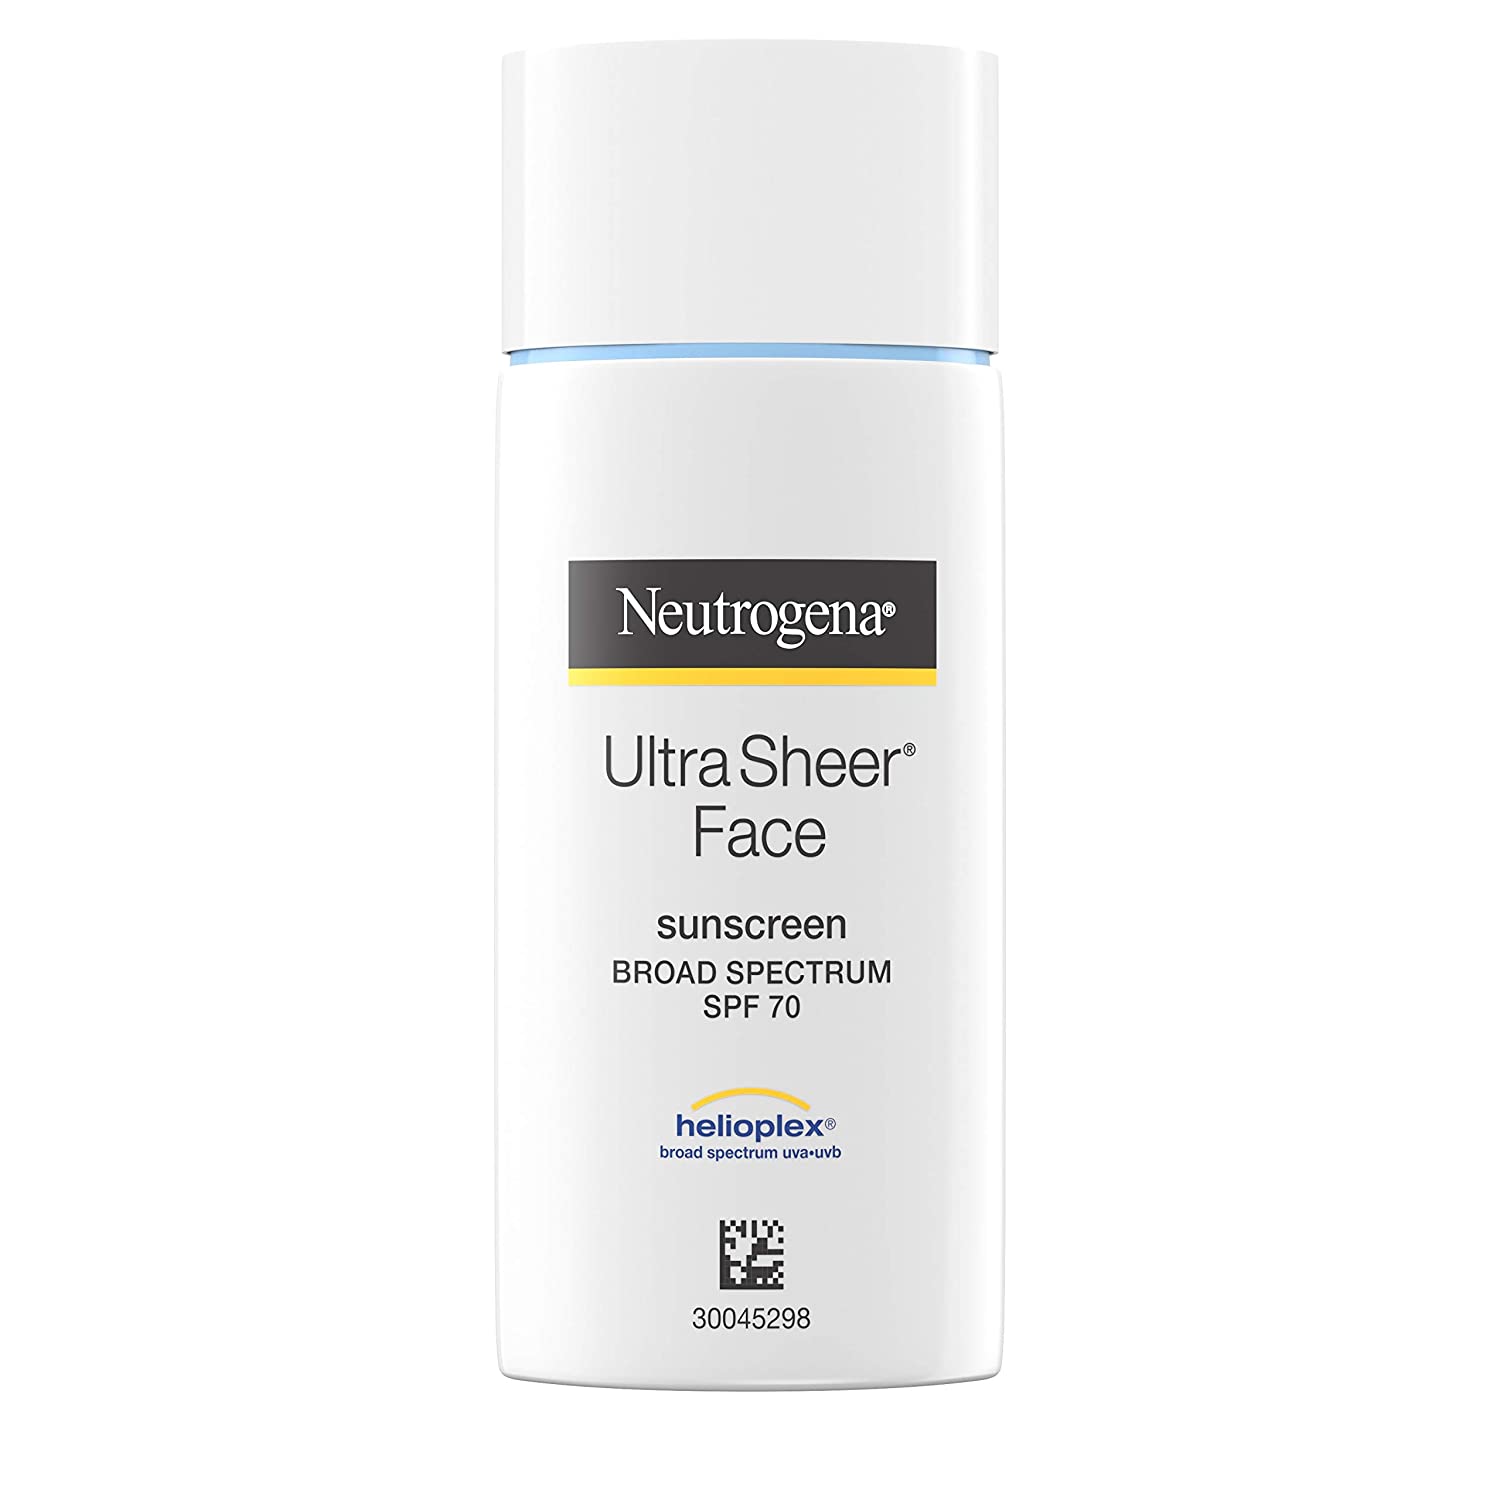 Neutrogena Ultra Sheer Face Sunscreen